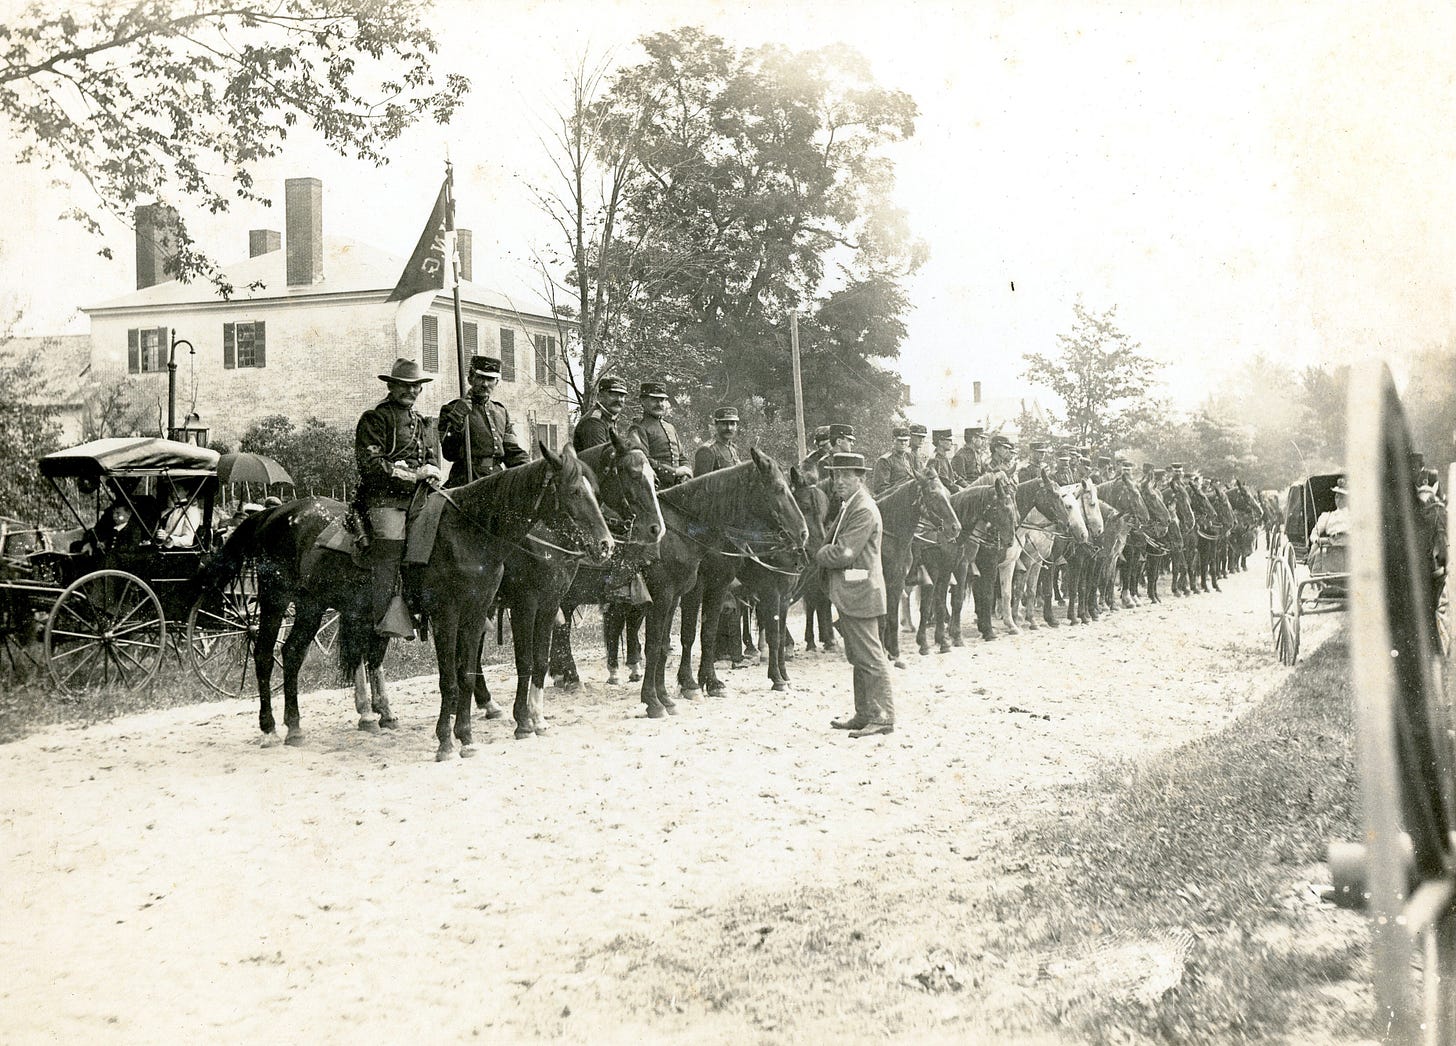 Men in uniform on horseback